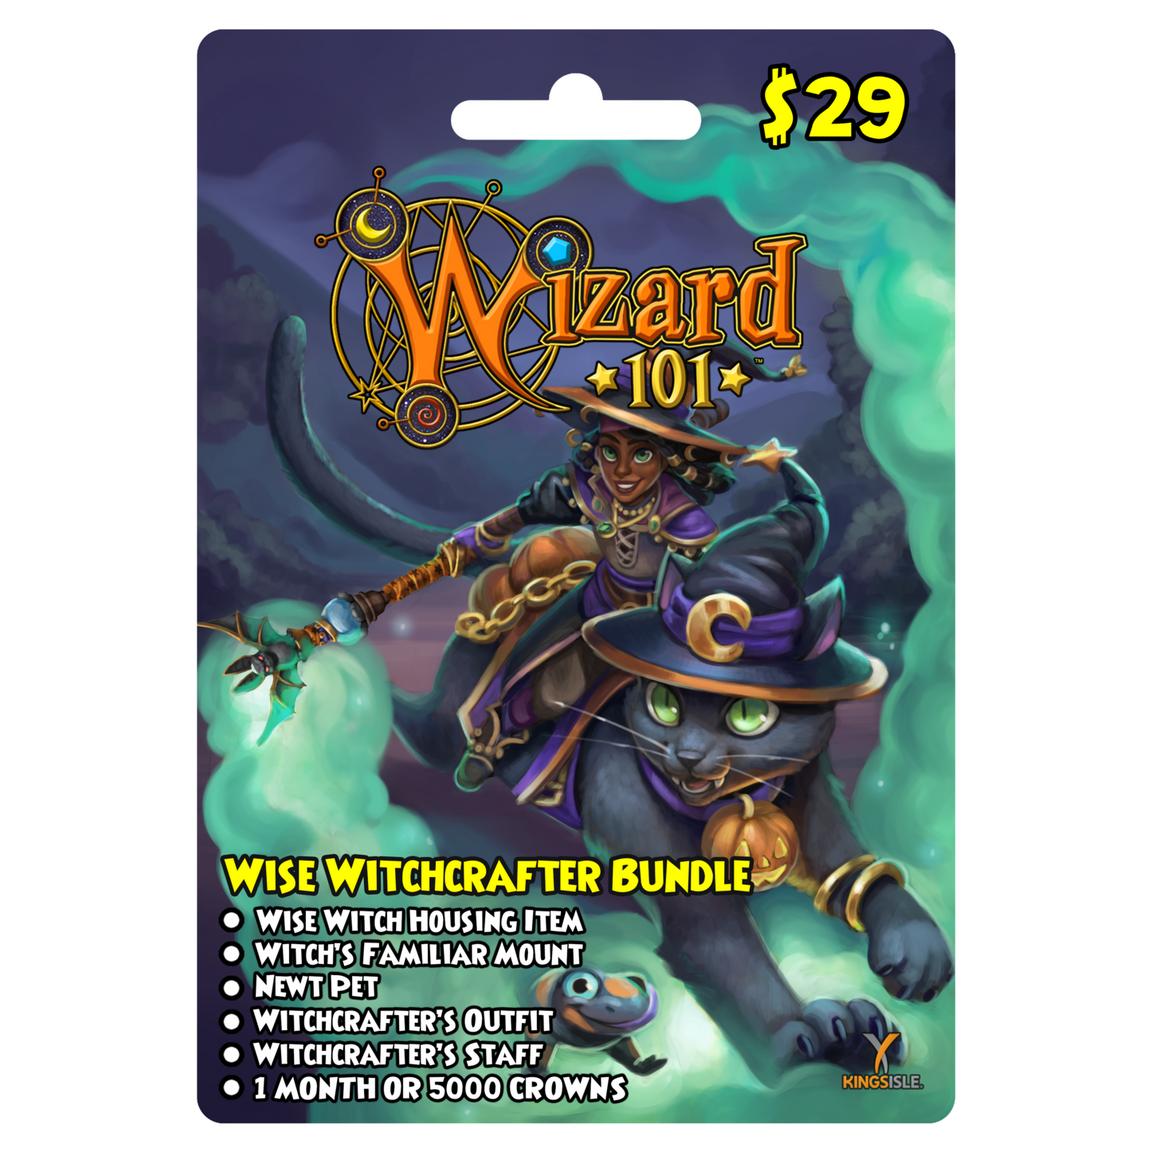 KingsIsle Entertainment KingsIsle Wizard101 Wise Witchcrafter Bundle - PC